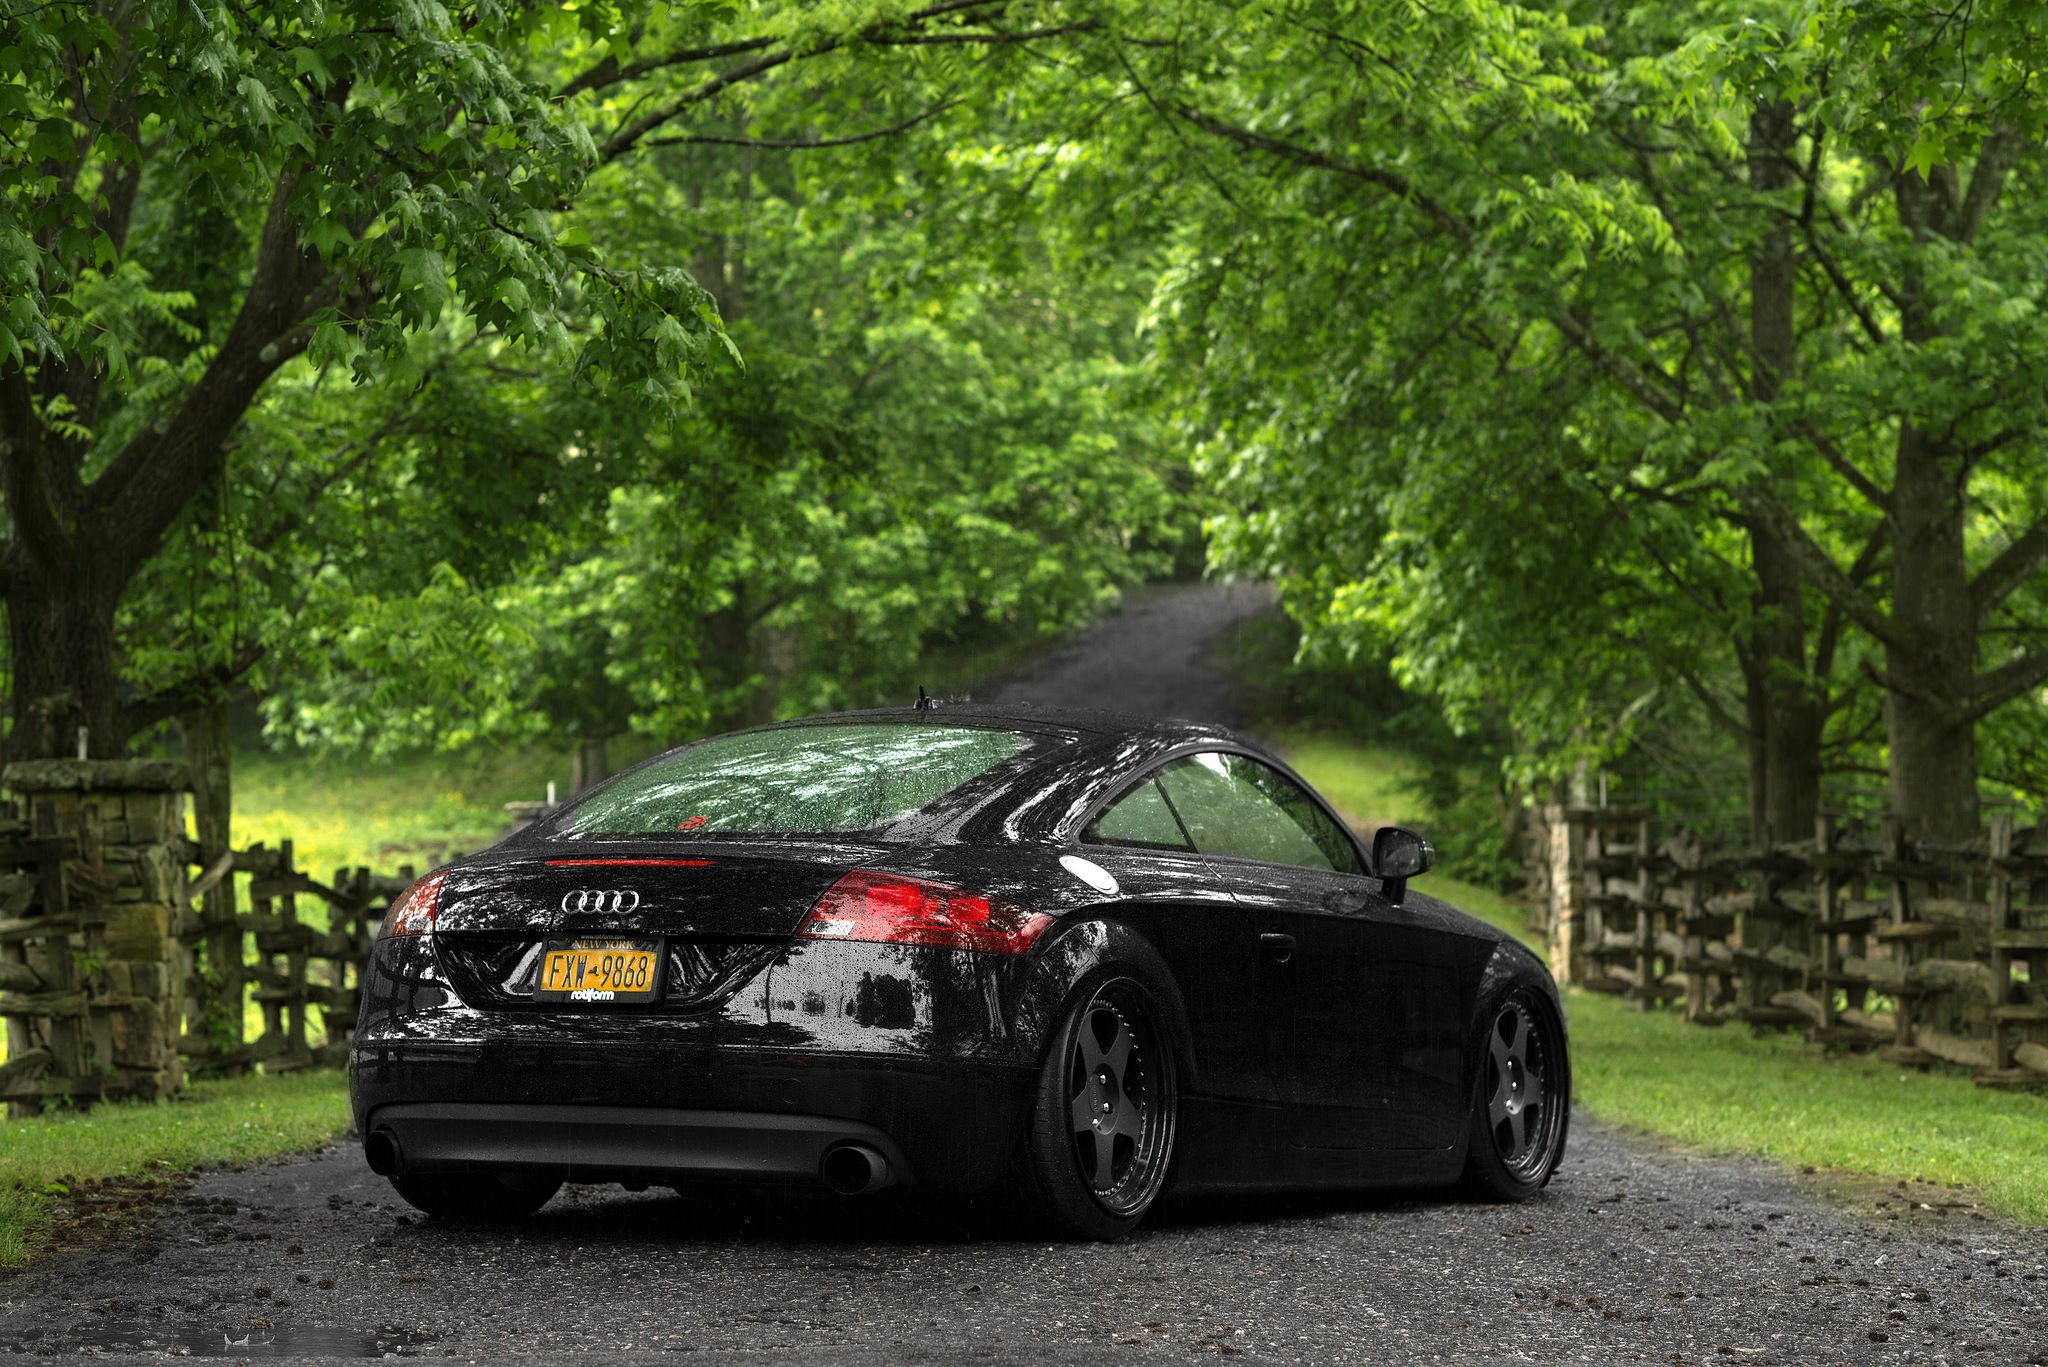 Audi TT on Aftermarket Wheels - Photo by Rotiform